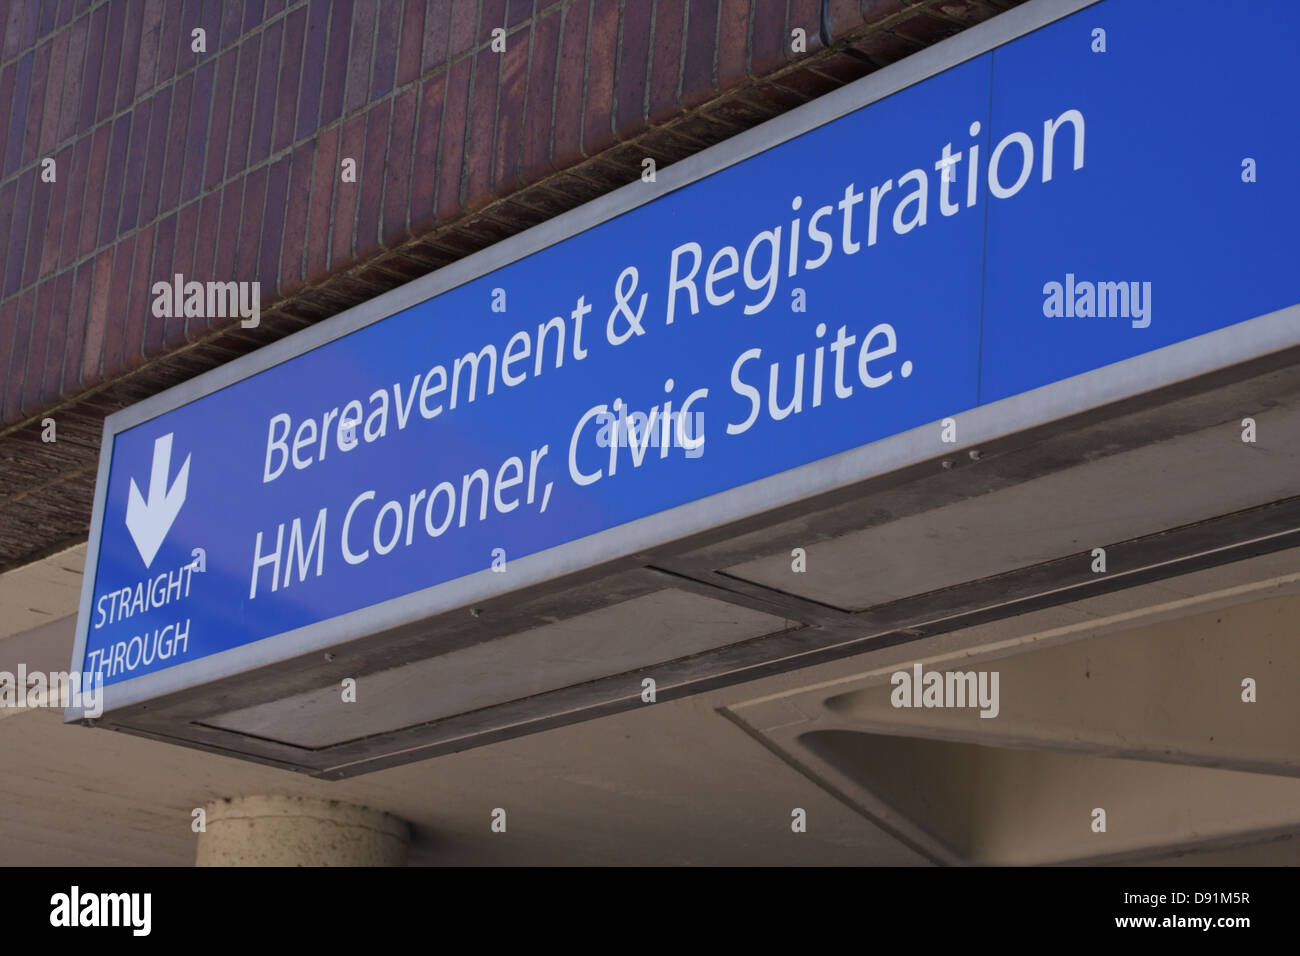 Sign for Bereavement & Registration, HM Coroner, Civic Suite. Stock Photo